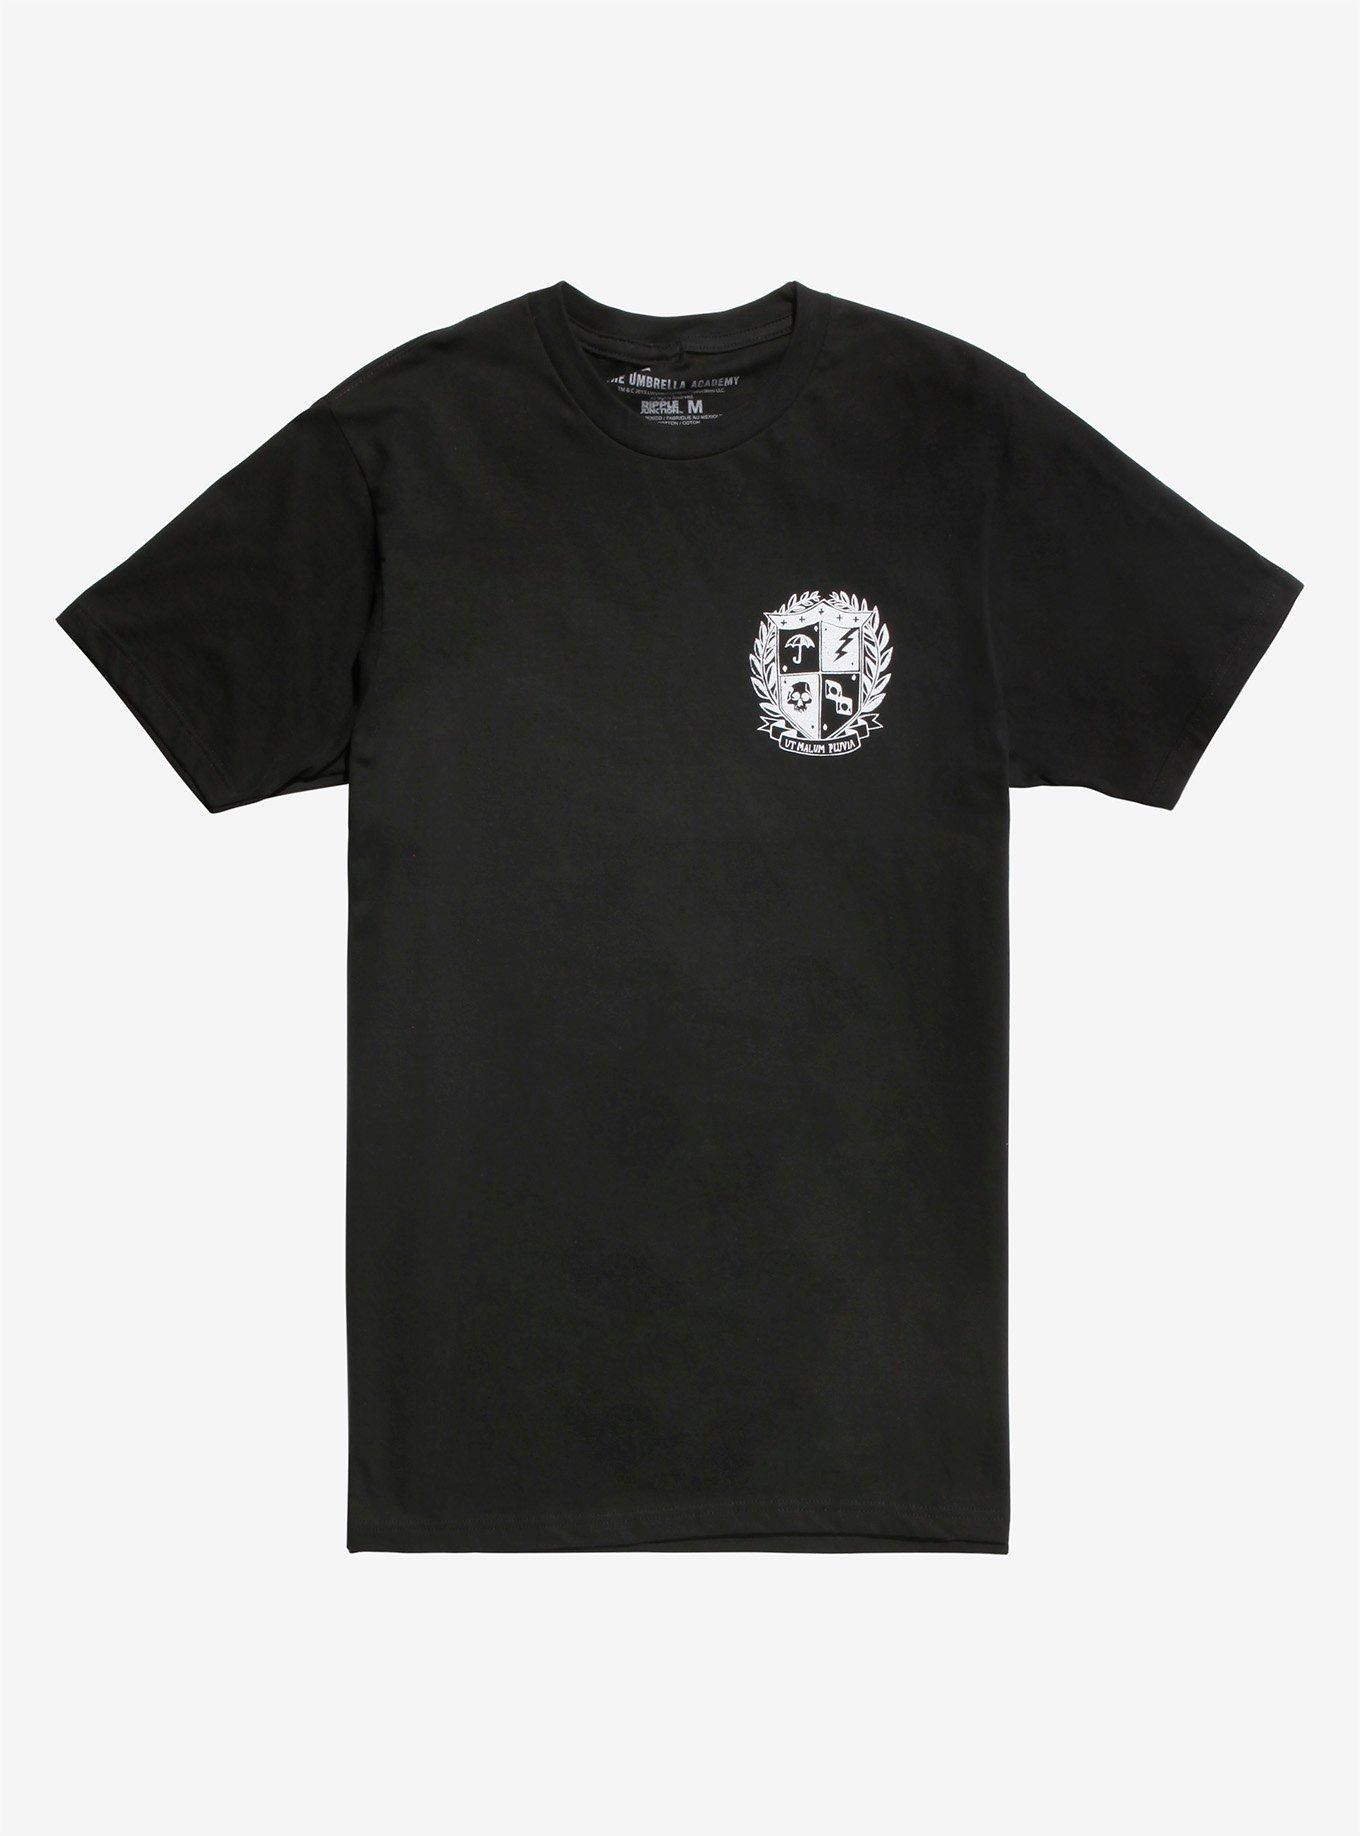 The Umbrella Academy Crest T-Shirt | Hot Topic